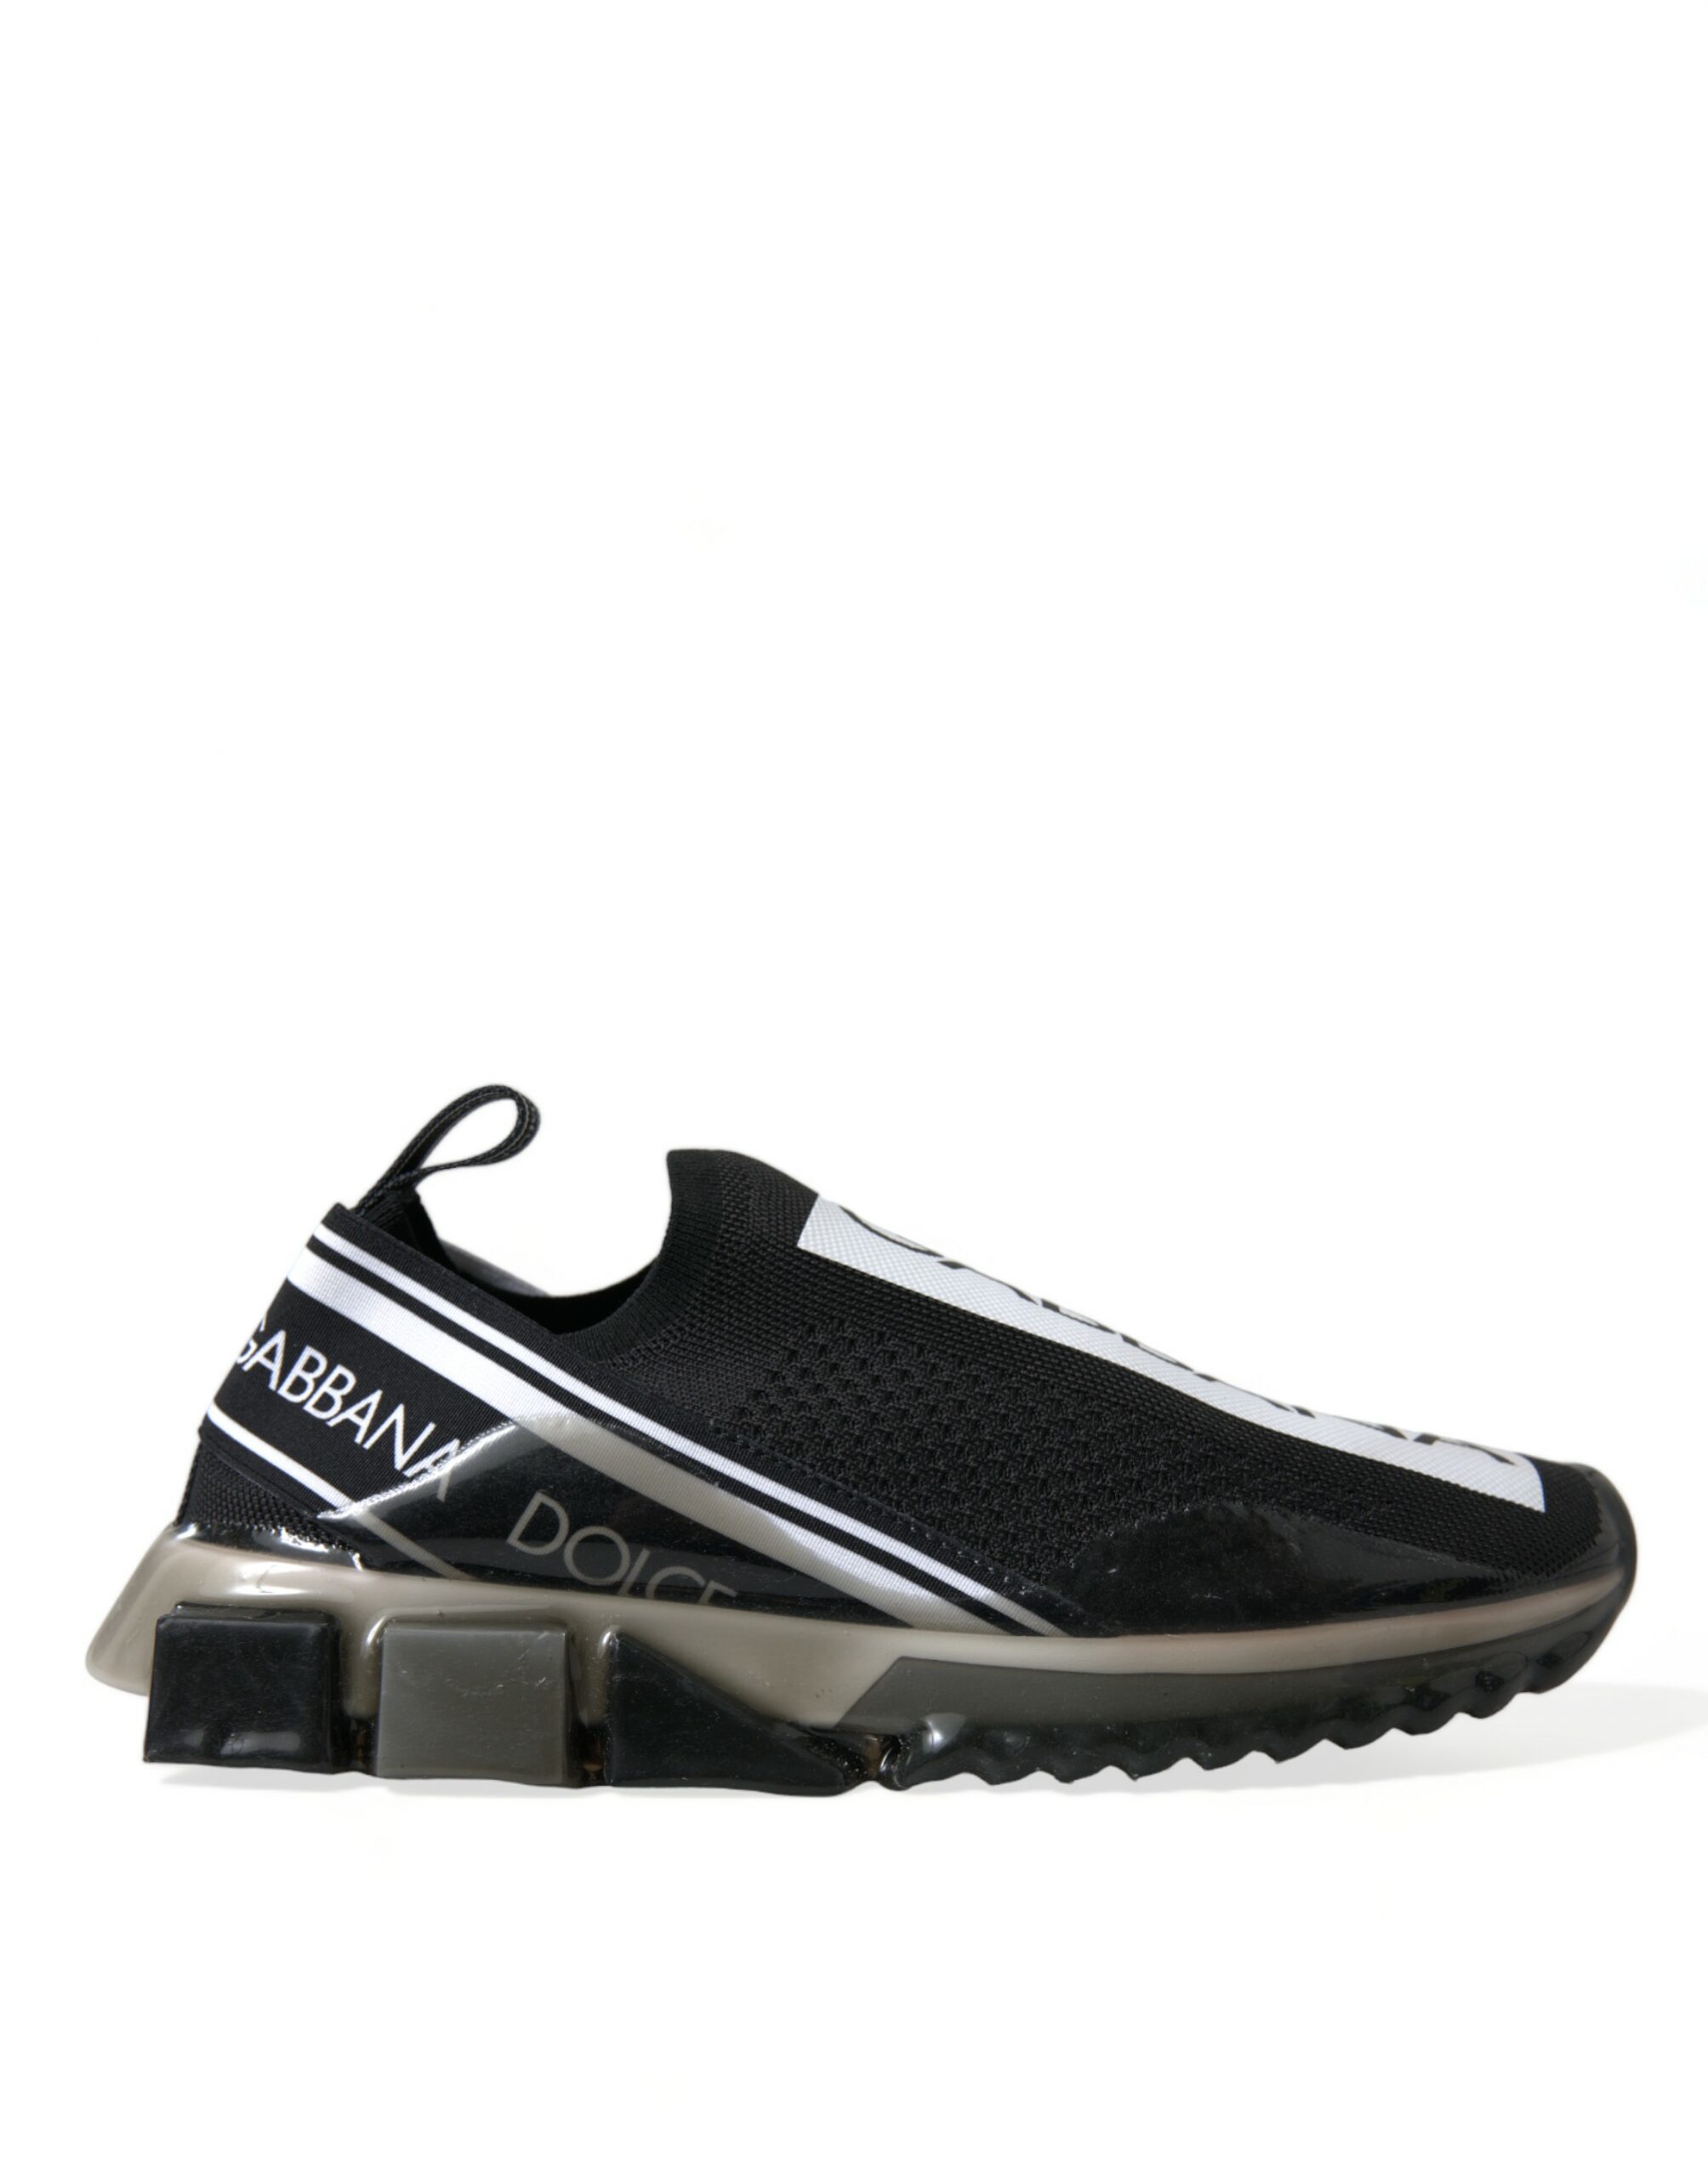 Black and White Dolce & Gabbana Elegant Black & White Sorrento Sneakers EU40/US7